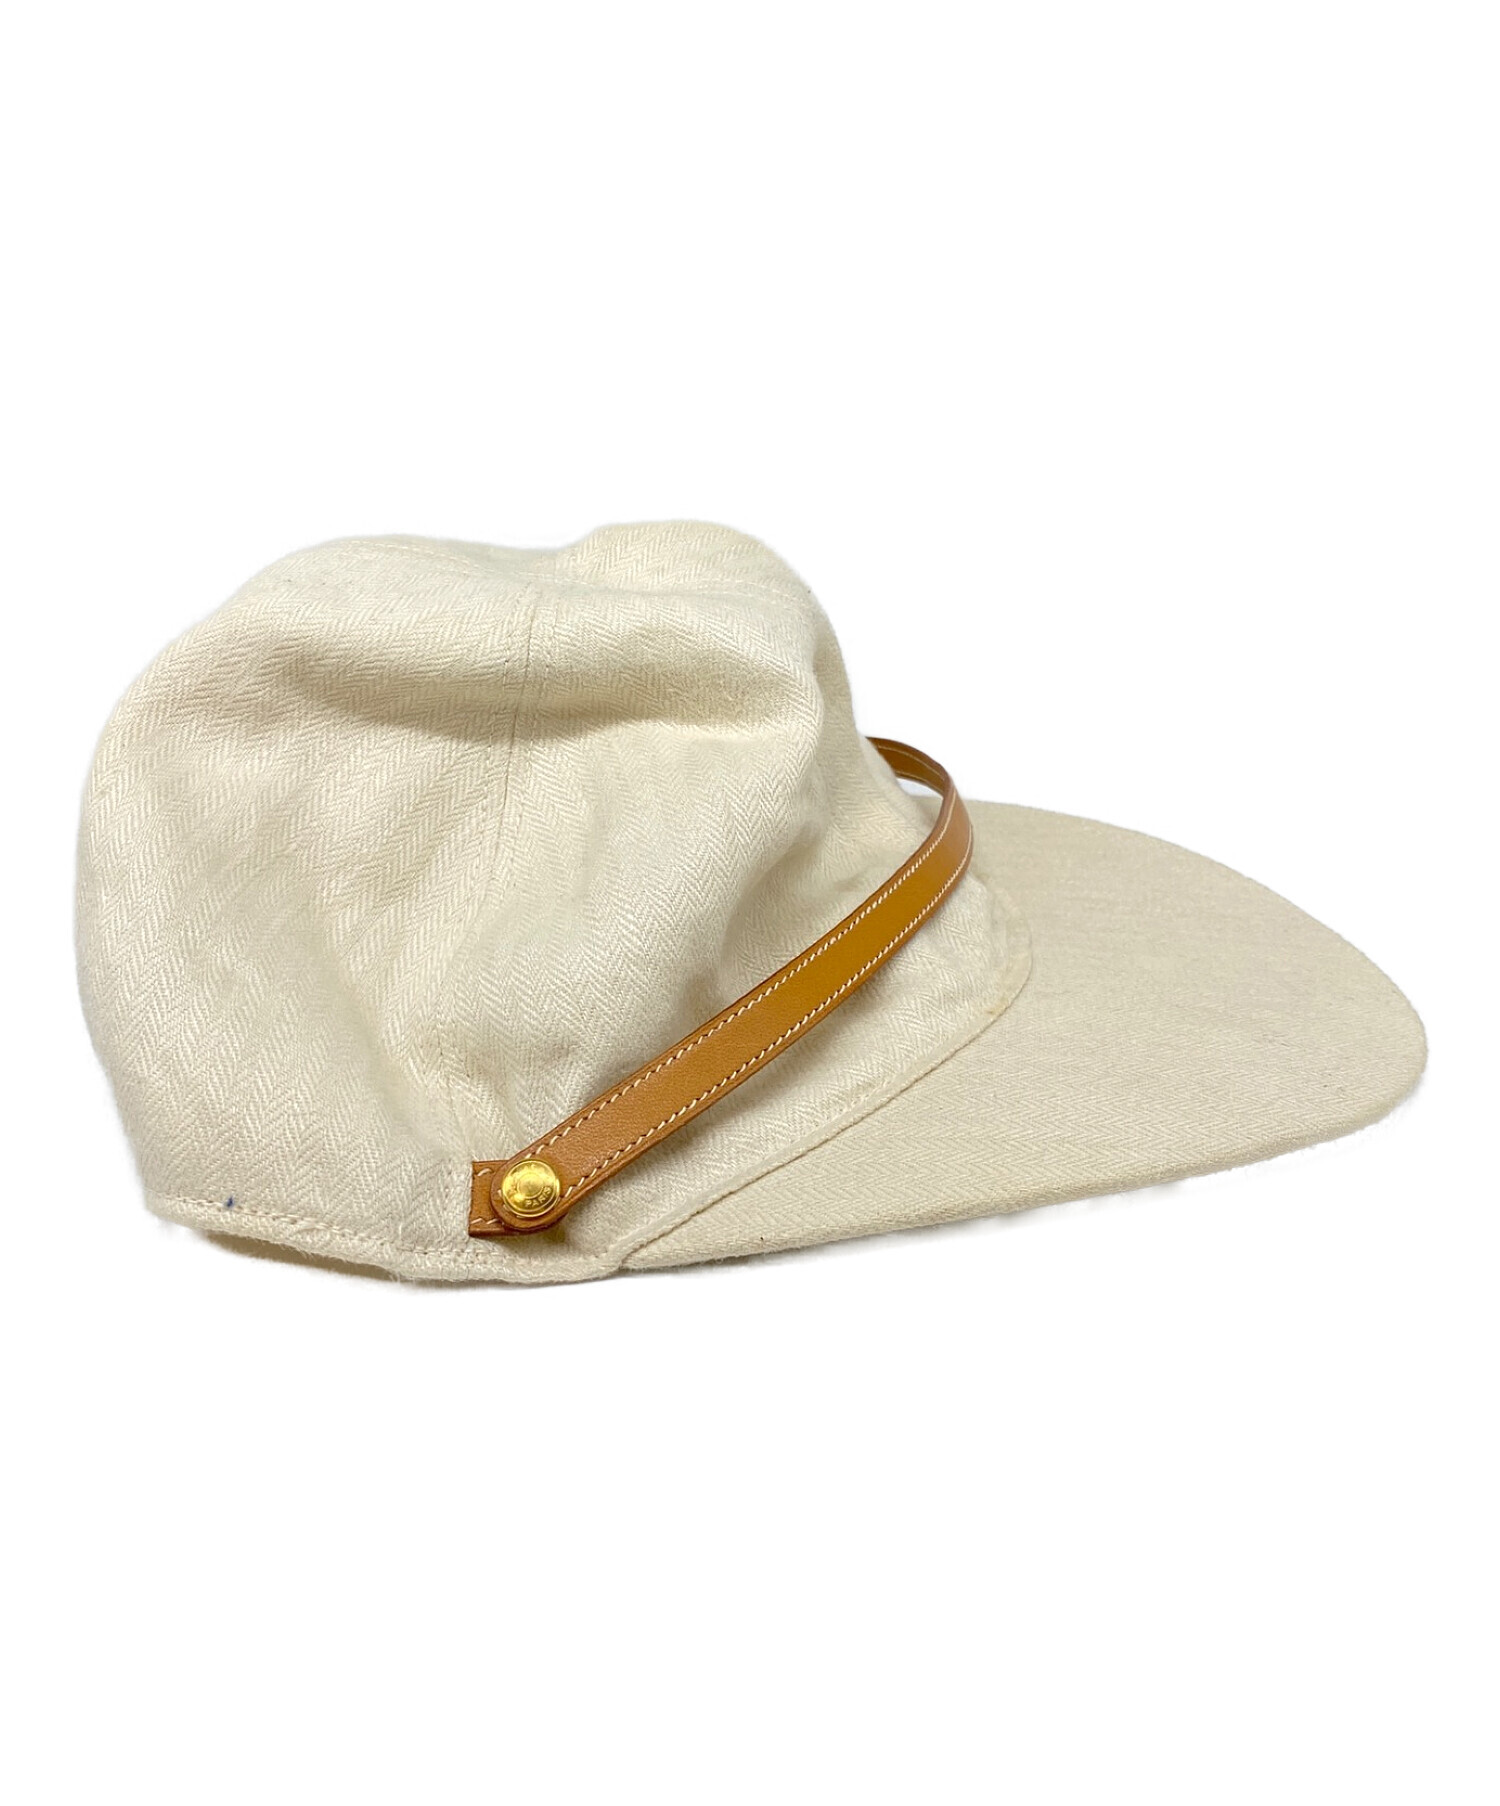 MOTSCH HERMES キャップ（エルメスの帽子ブランド） - 帽子